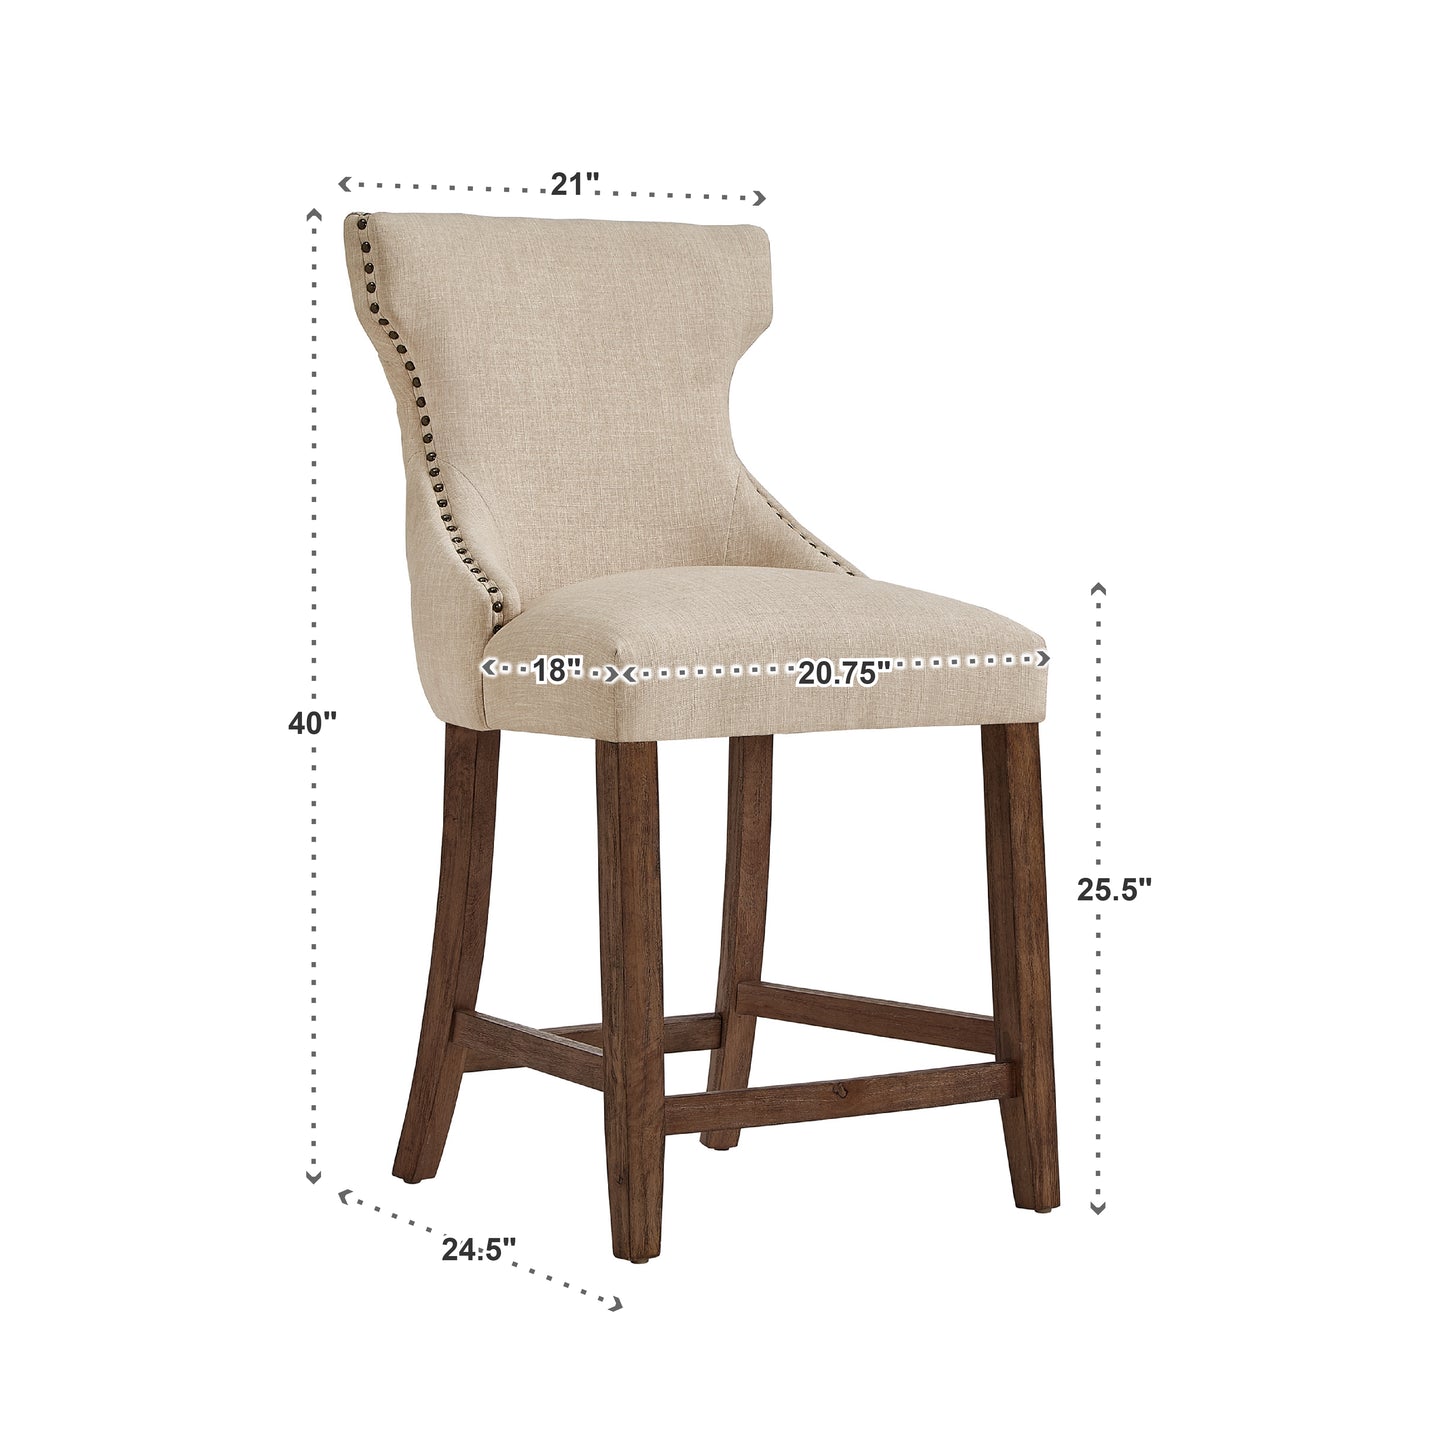 Nailhead Trim Linen Upholstered Stools (Set of 2) - Beige Linen, Counter Height